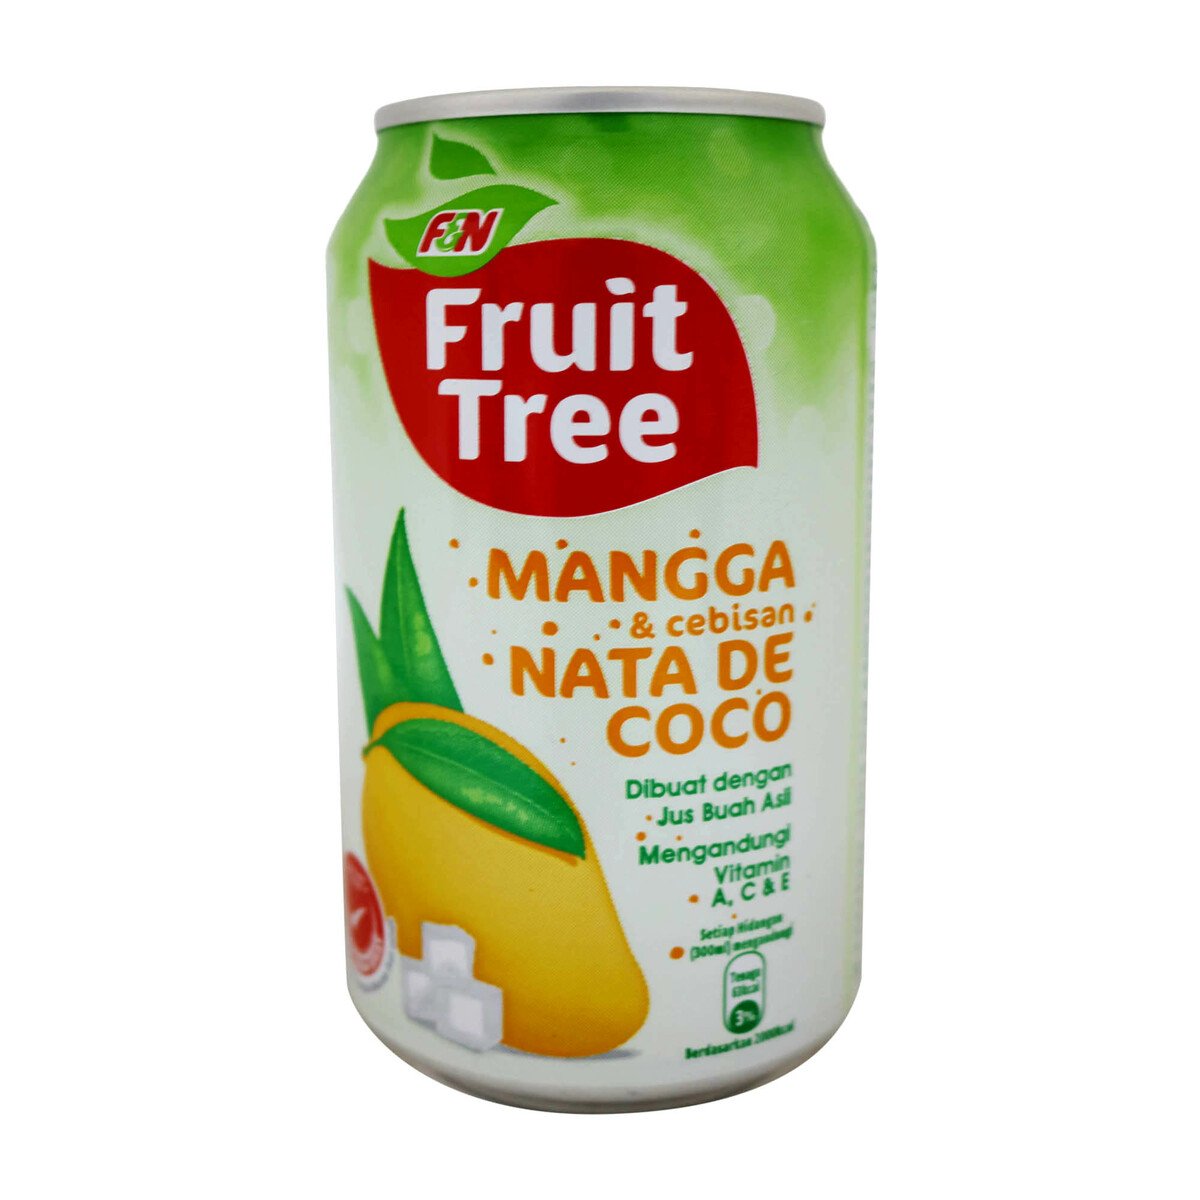 Fruit Tree Mango Nnata De Coco Can 300ml